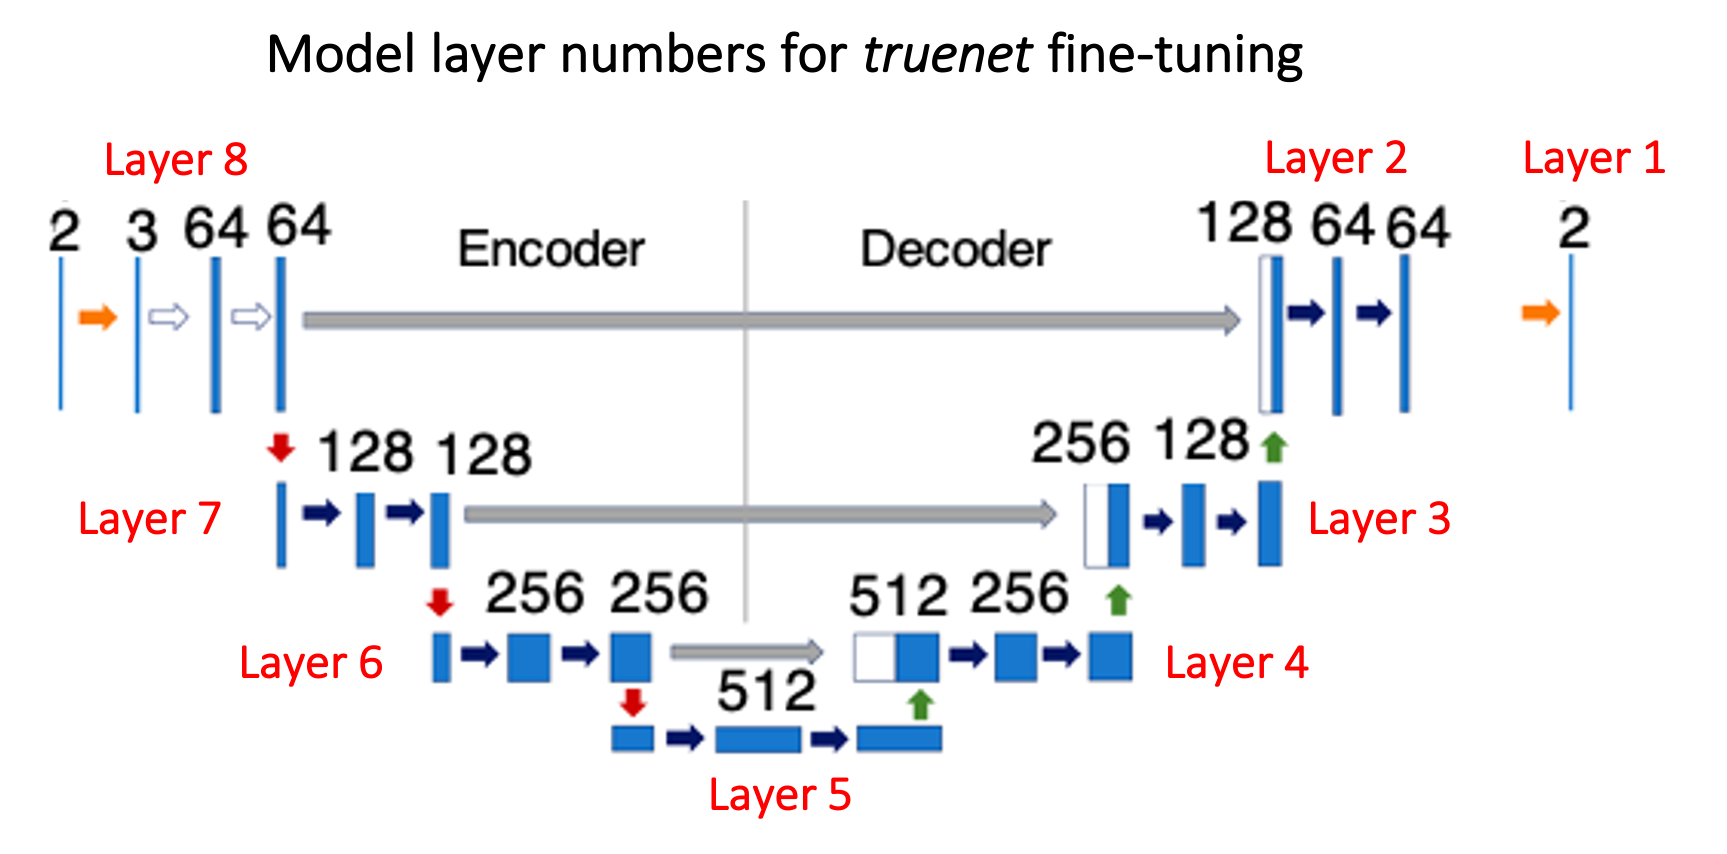 Layers for fine-tuning truenet model.